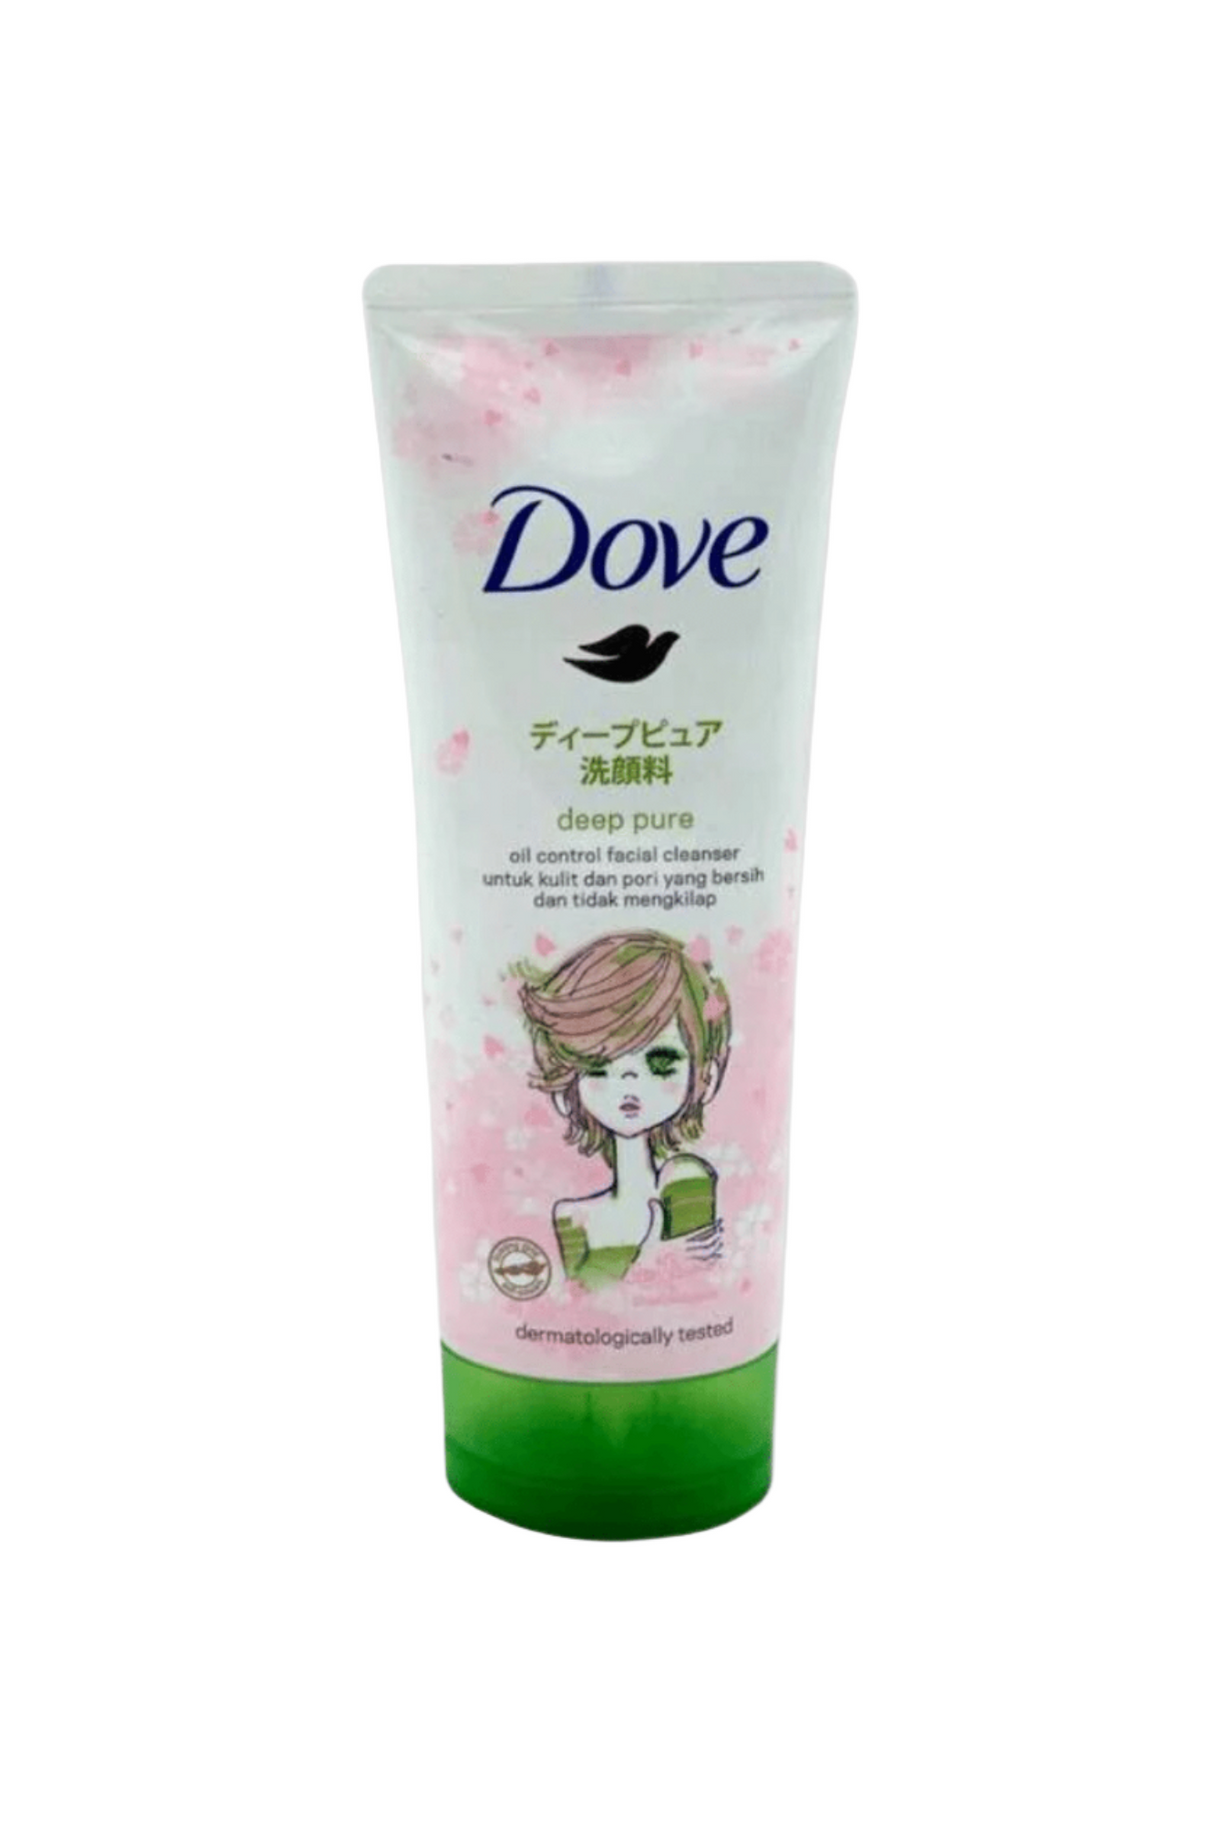 dove face wash deep pure 100g